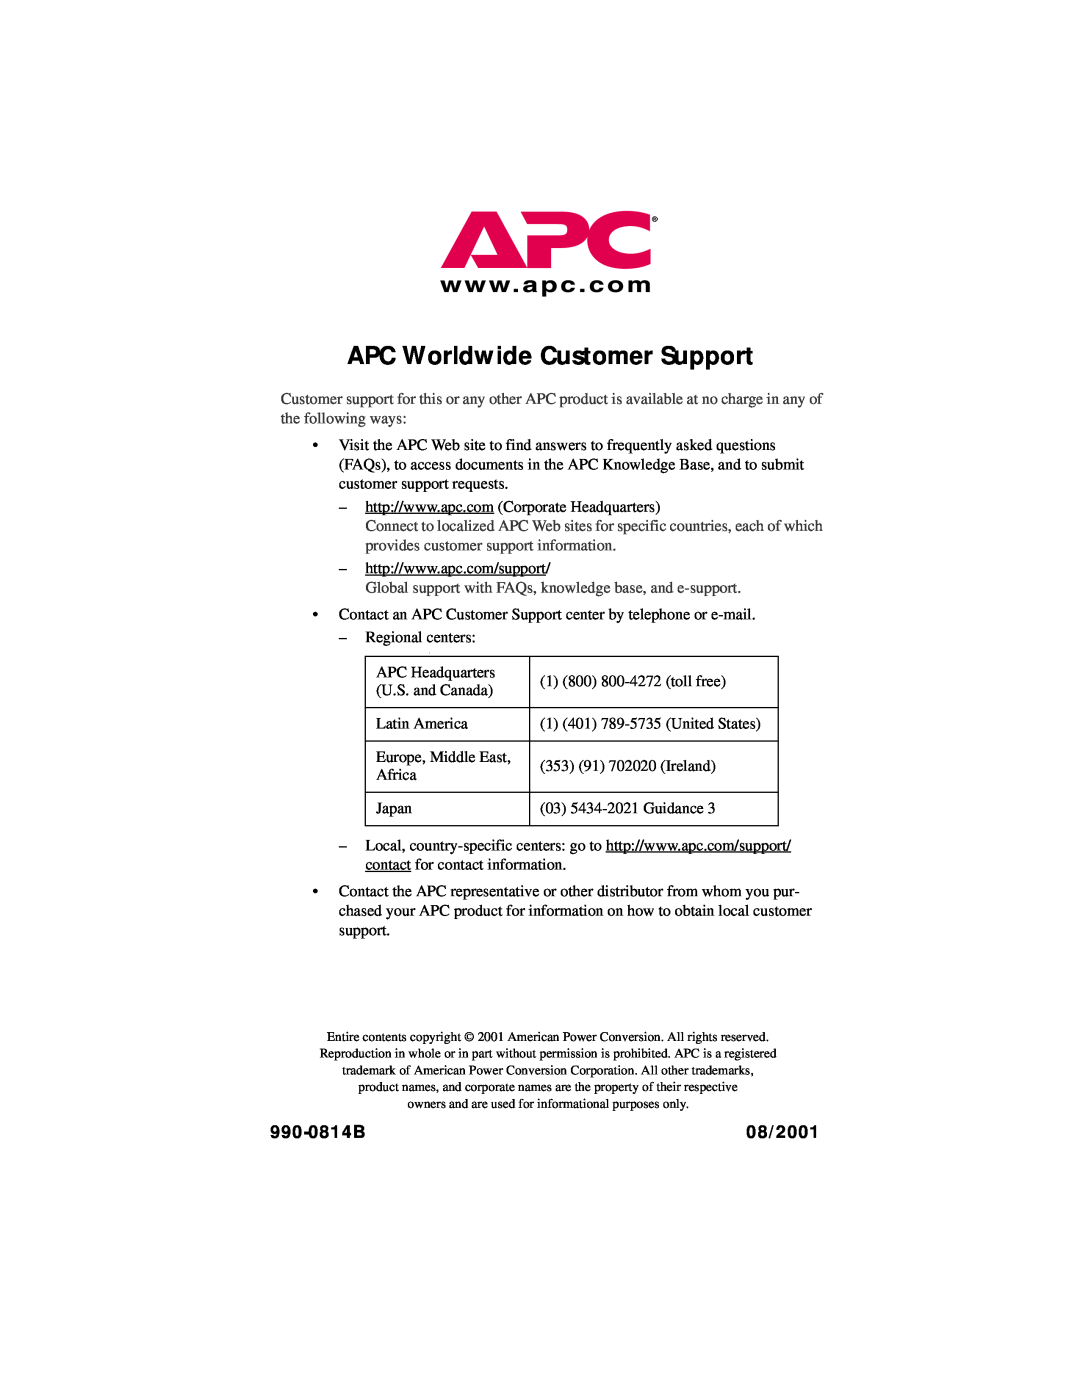 American Power Conversion AP9312TH quick start manual APC Worldwide Customer Support, 990-0814B, 08/2001 